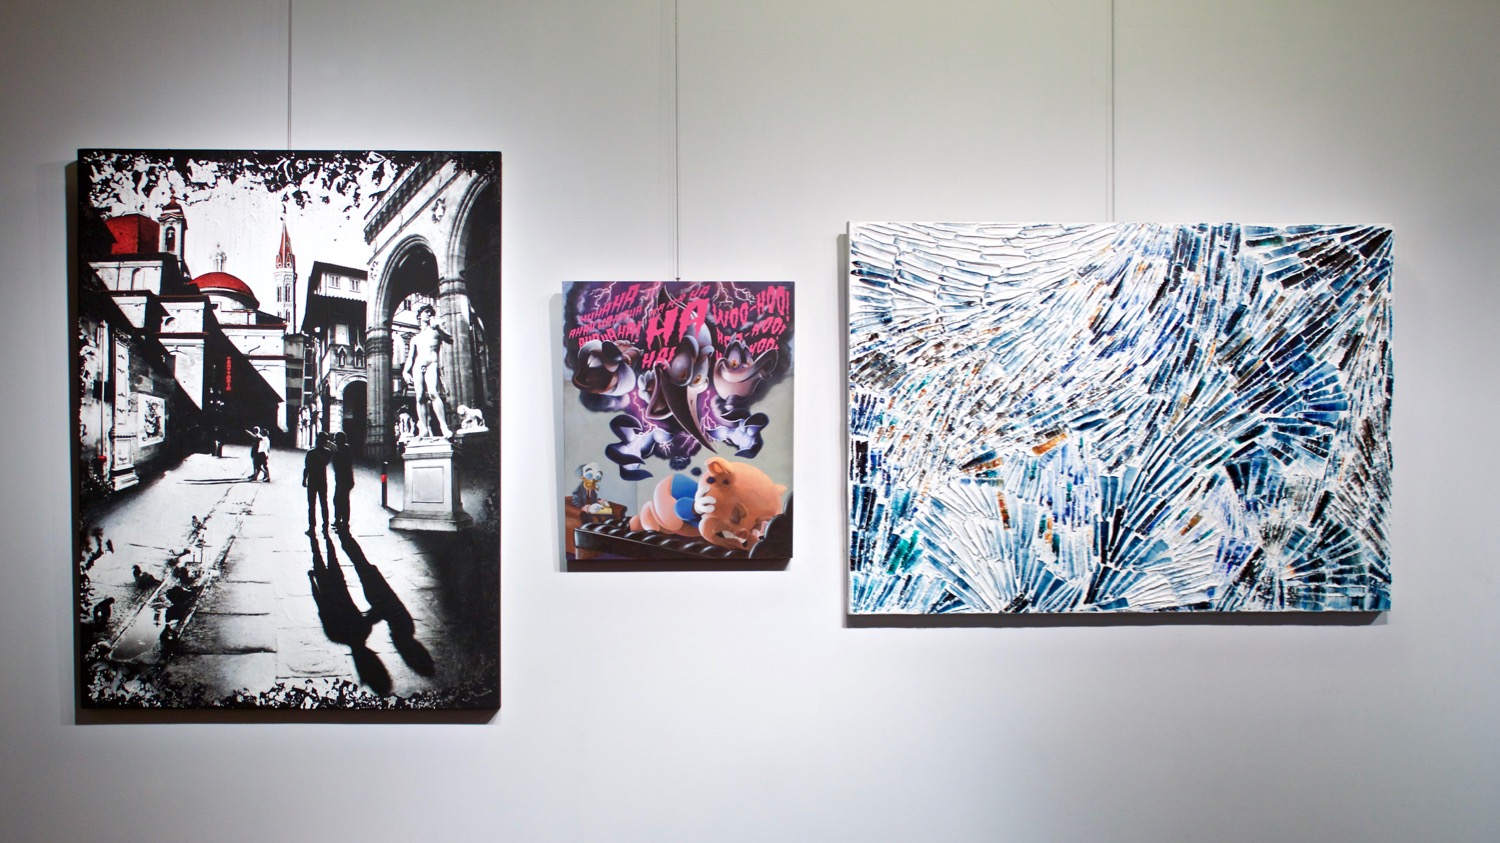 The artworks of Montreal emerging artists Denise Buisman Pilger, Jono Doiron and Louis-Bernard St-Jean